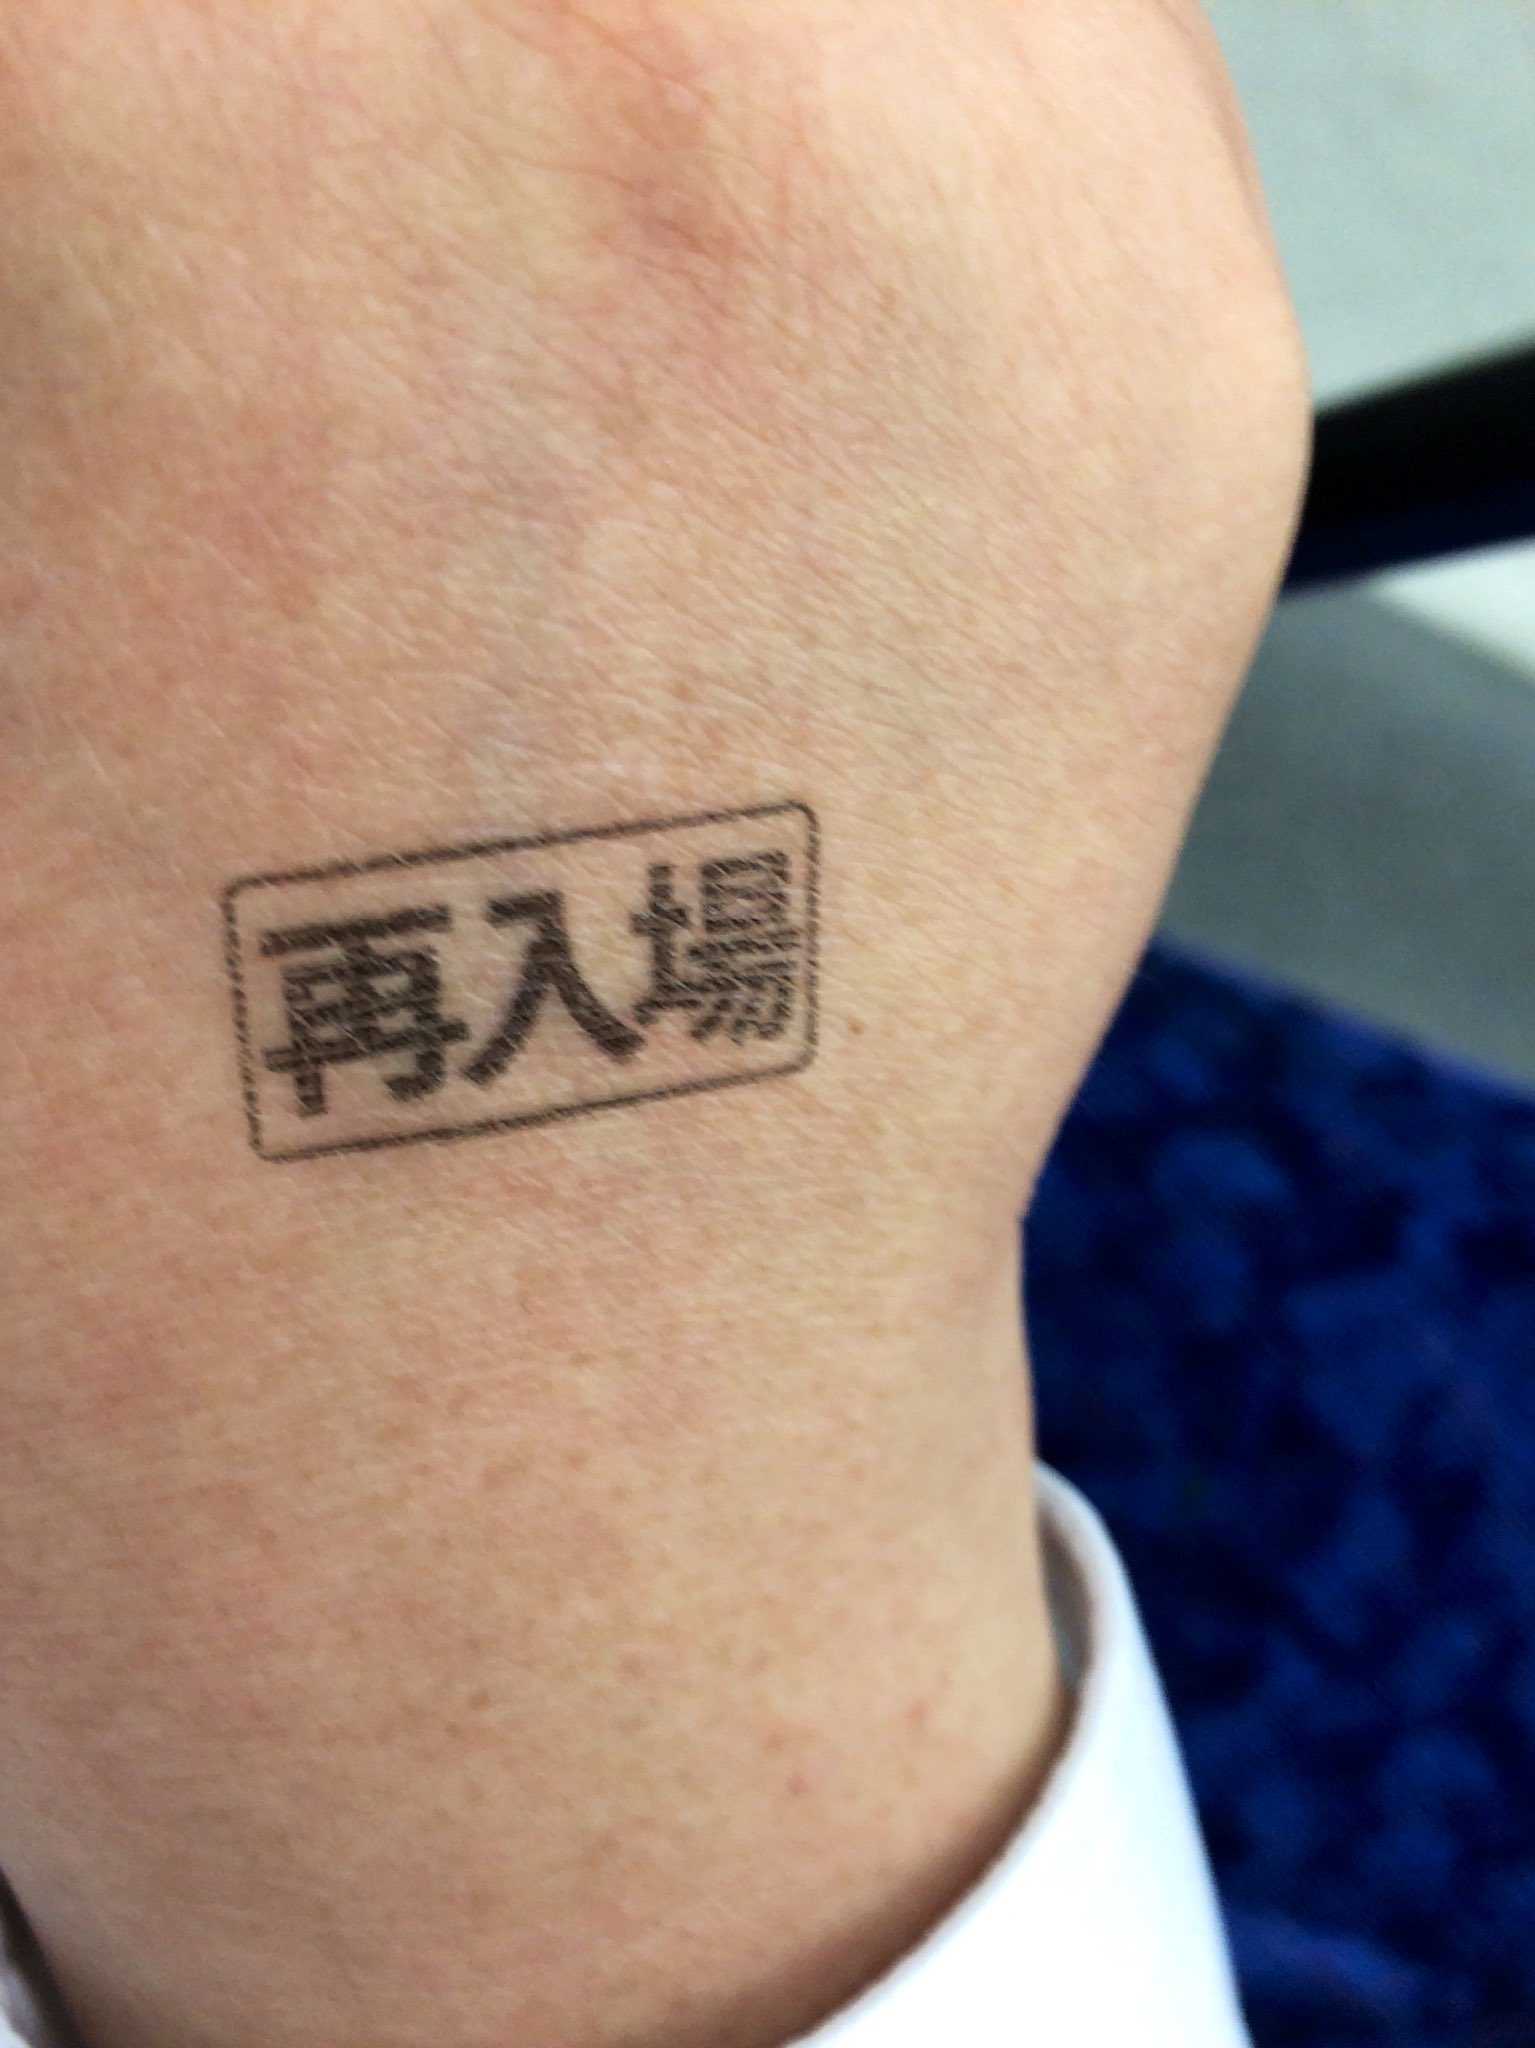 Yukinahara 手の甲のスタンプ 海外の漢字タトゥーと思い込むことにする T Co Zcewlcijol Twitter